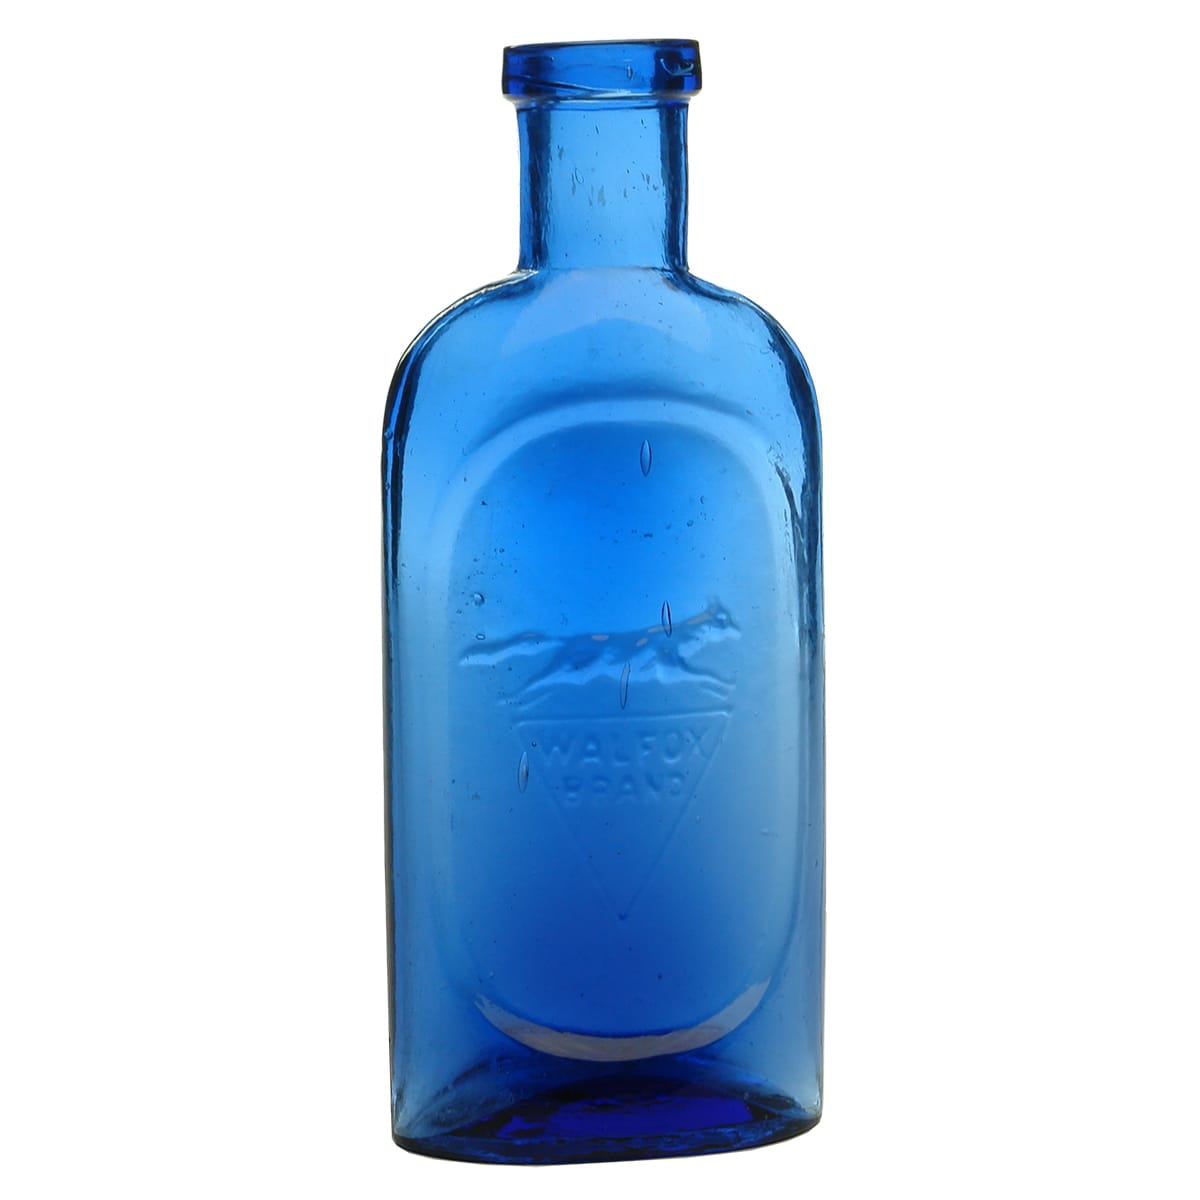 Walfox Brand Blue Bottle